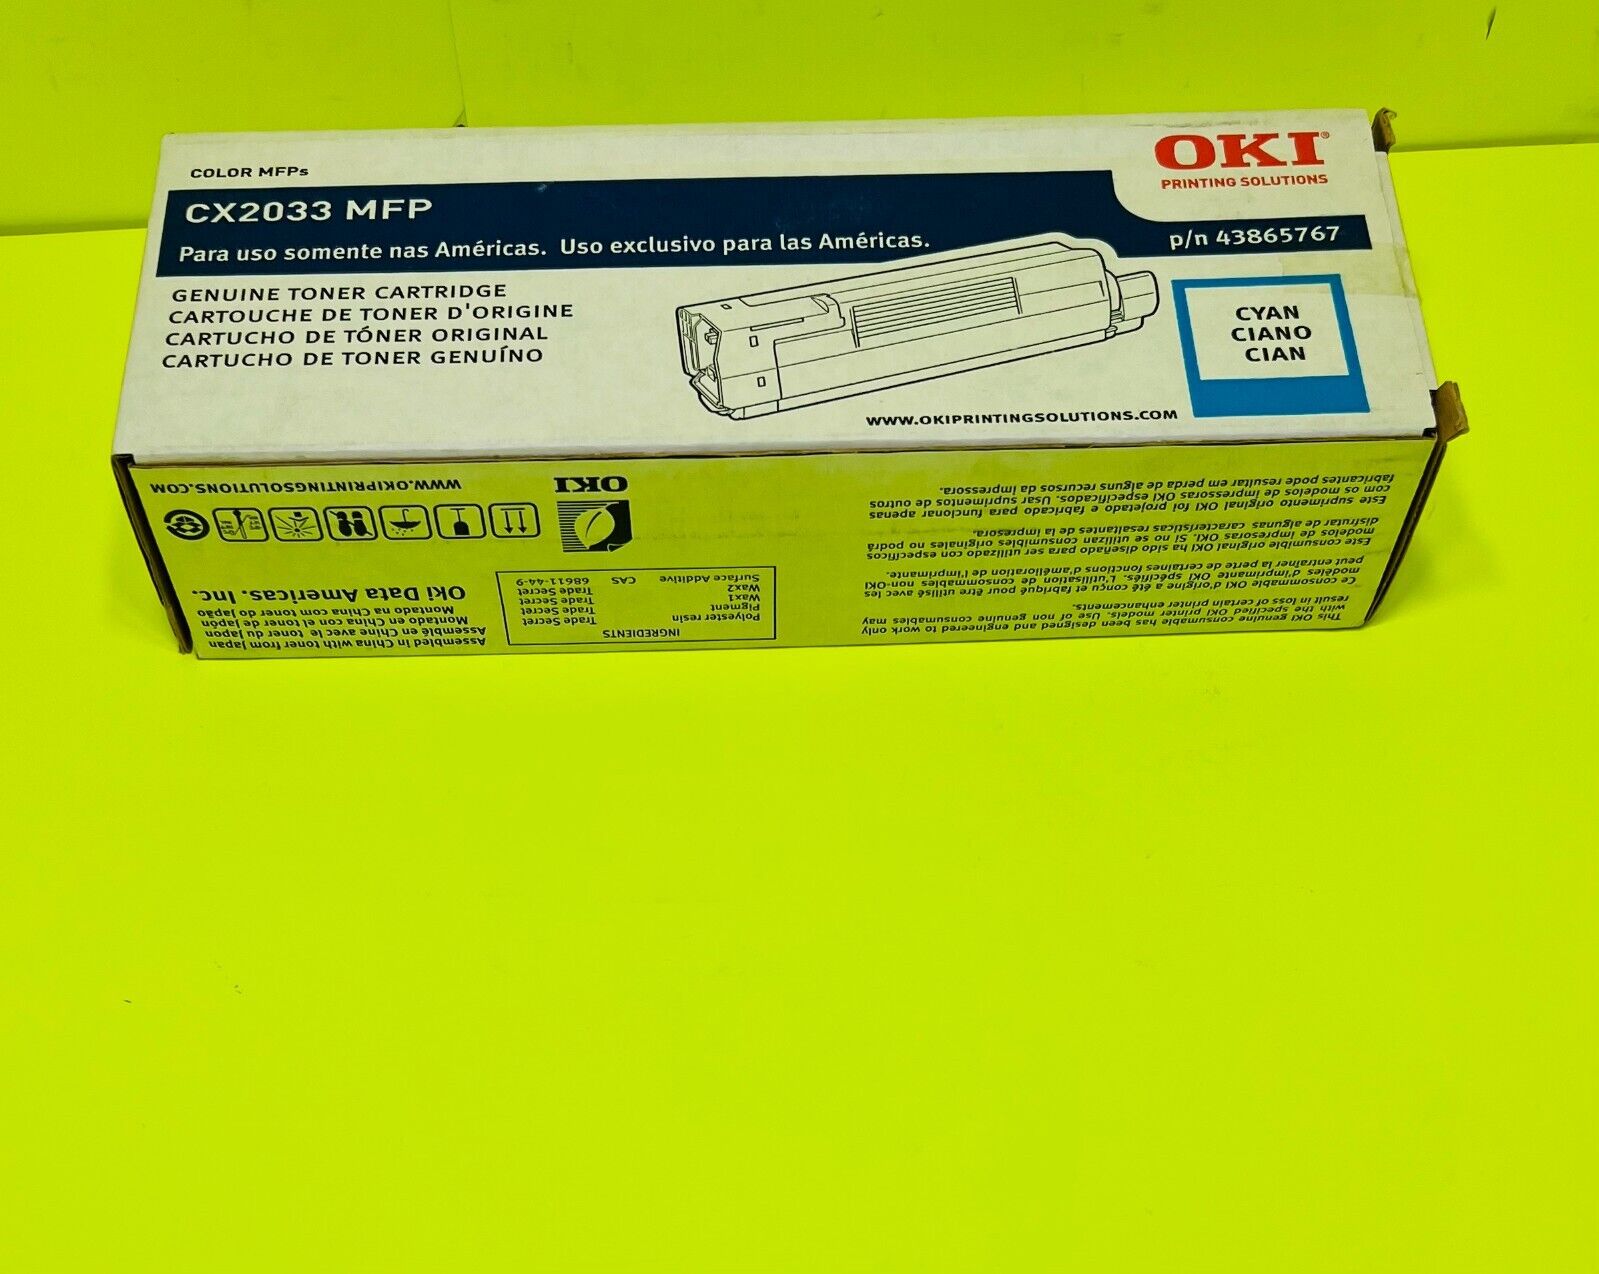 Genuine Oki Toner Cartridge Cyan for CX2033 MFP OEM